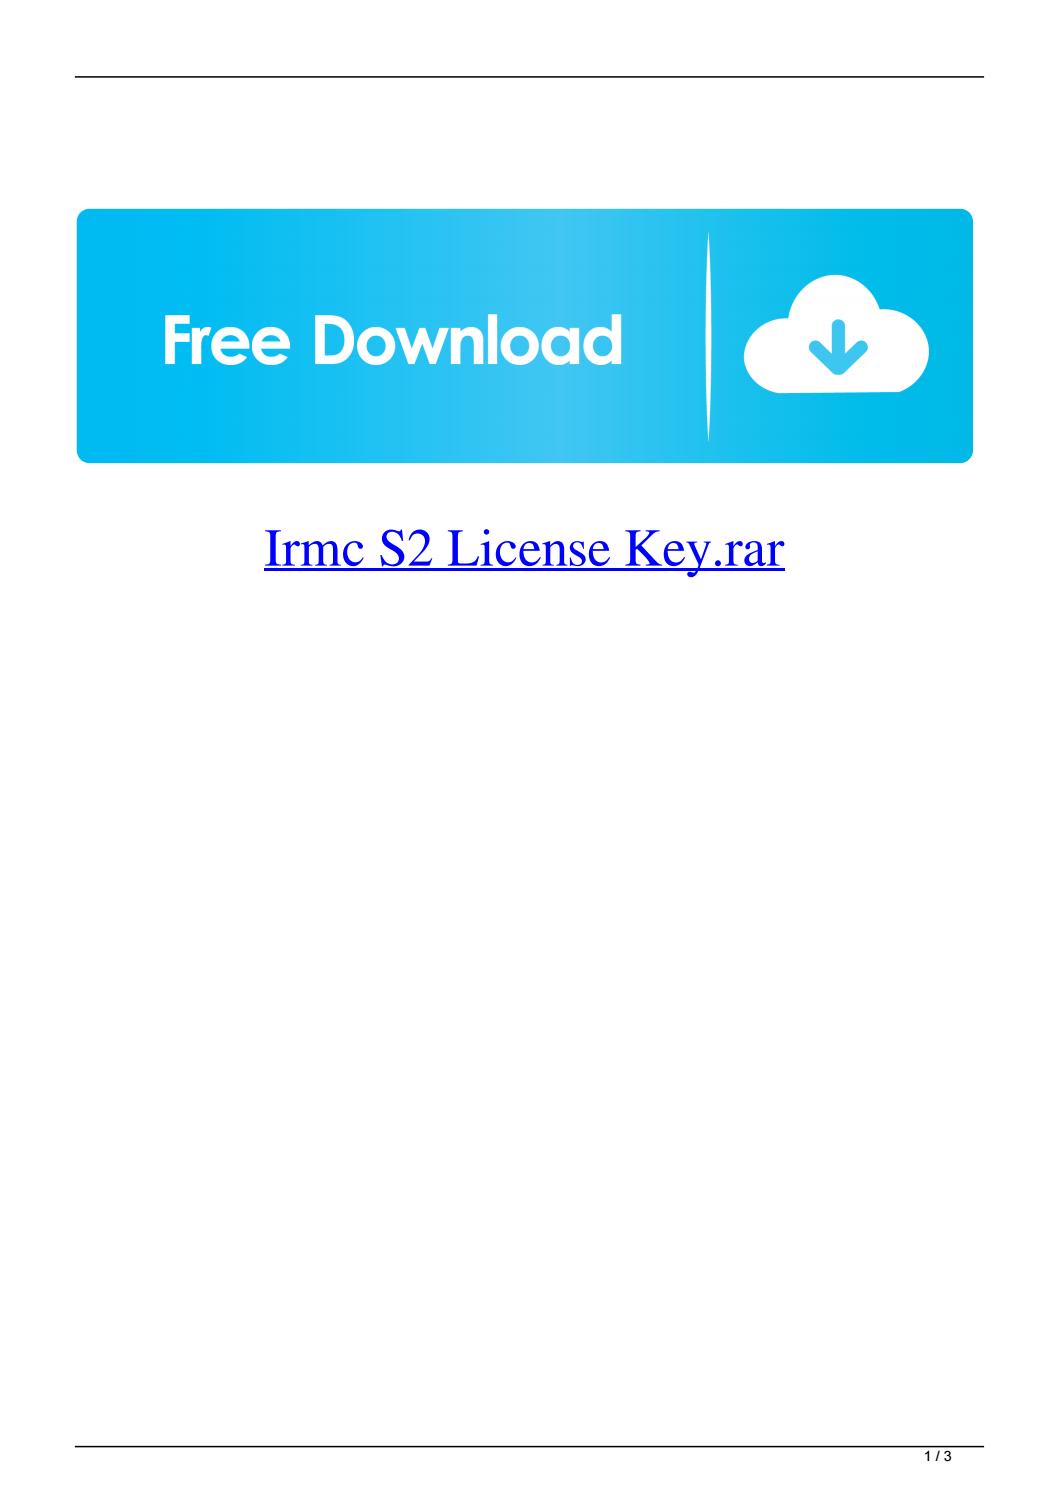 Irmc s2 license key download